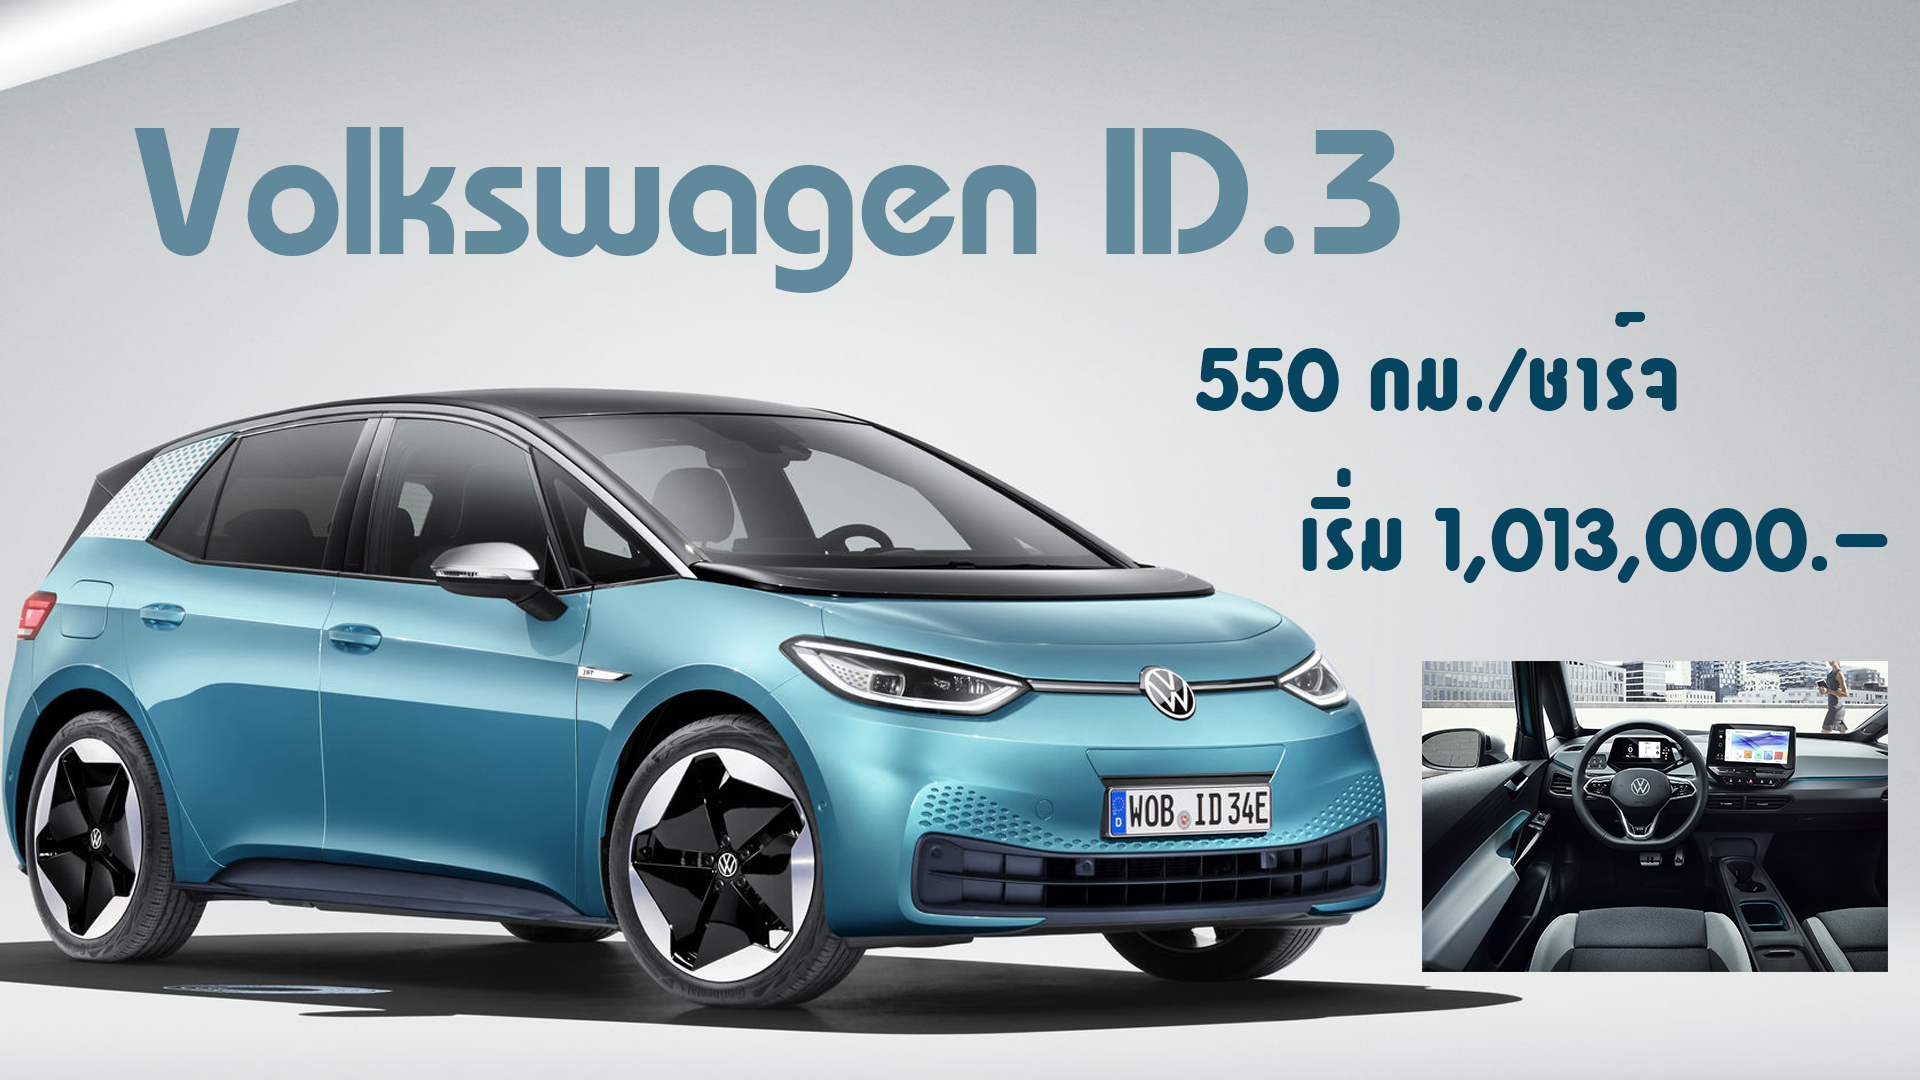 All-new Volkswagen ID.3 วิ่งได้ 550 กม./ชาร์จ ราคา 1.01 ล้านบาท